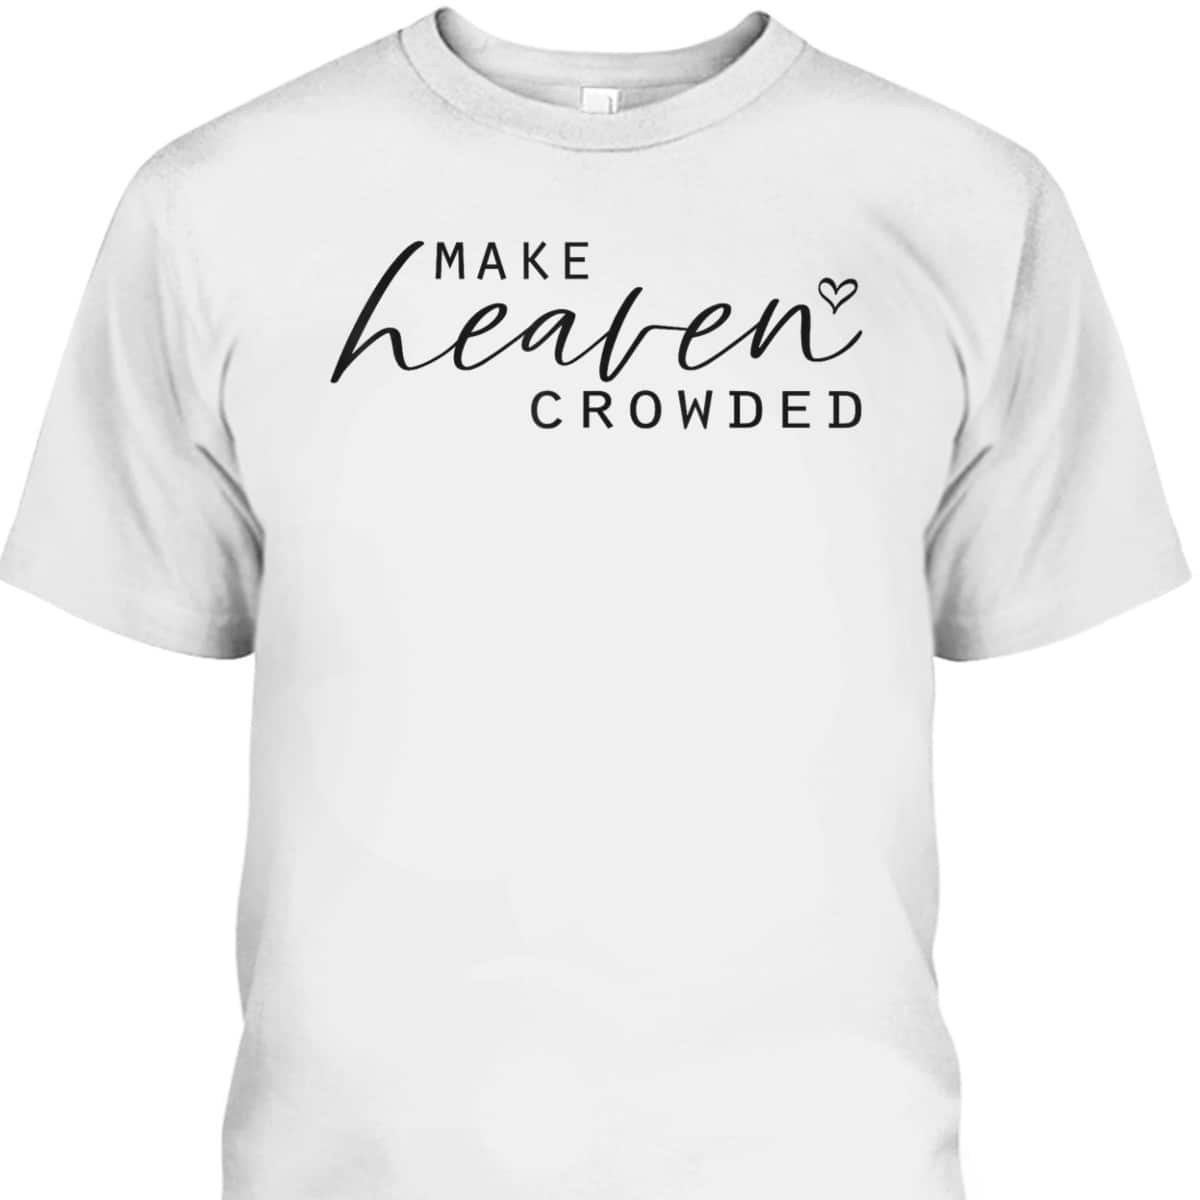 Make Heaven Crowded Fashion Top Christian Slogan T-Shirt